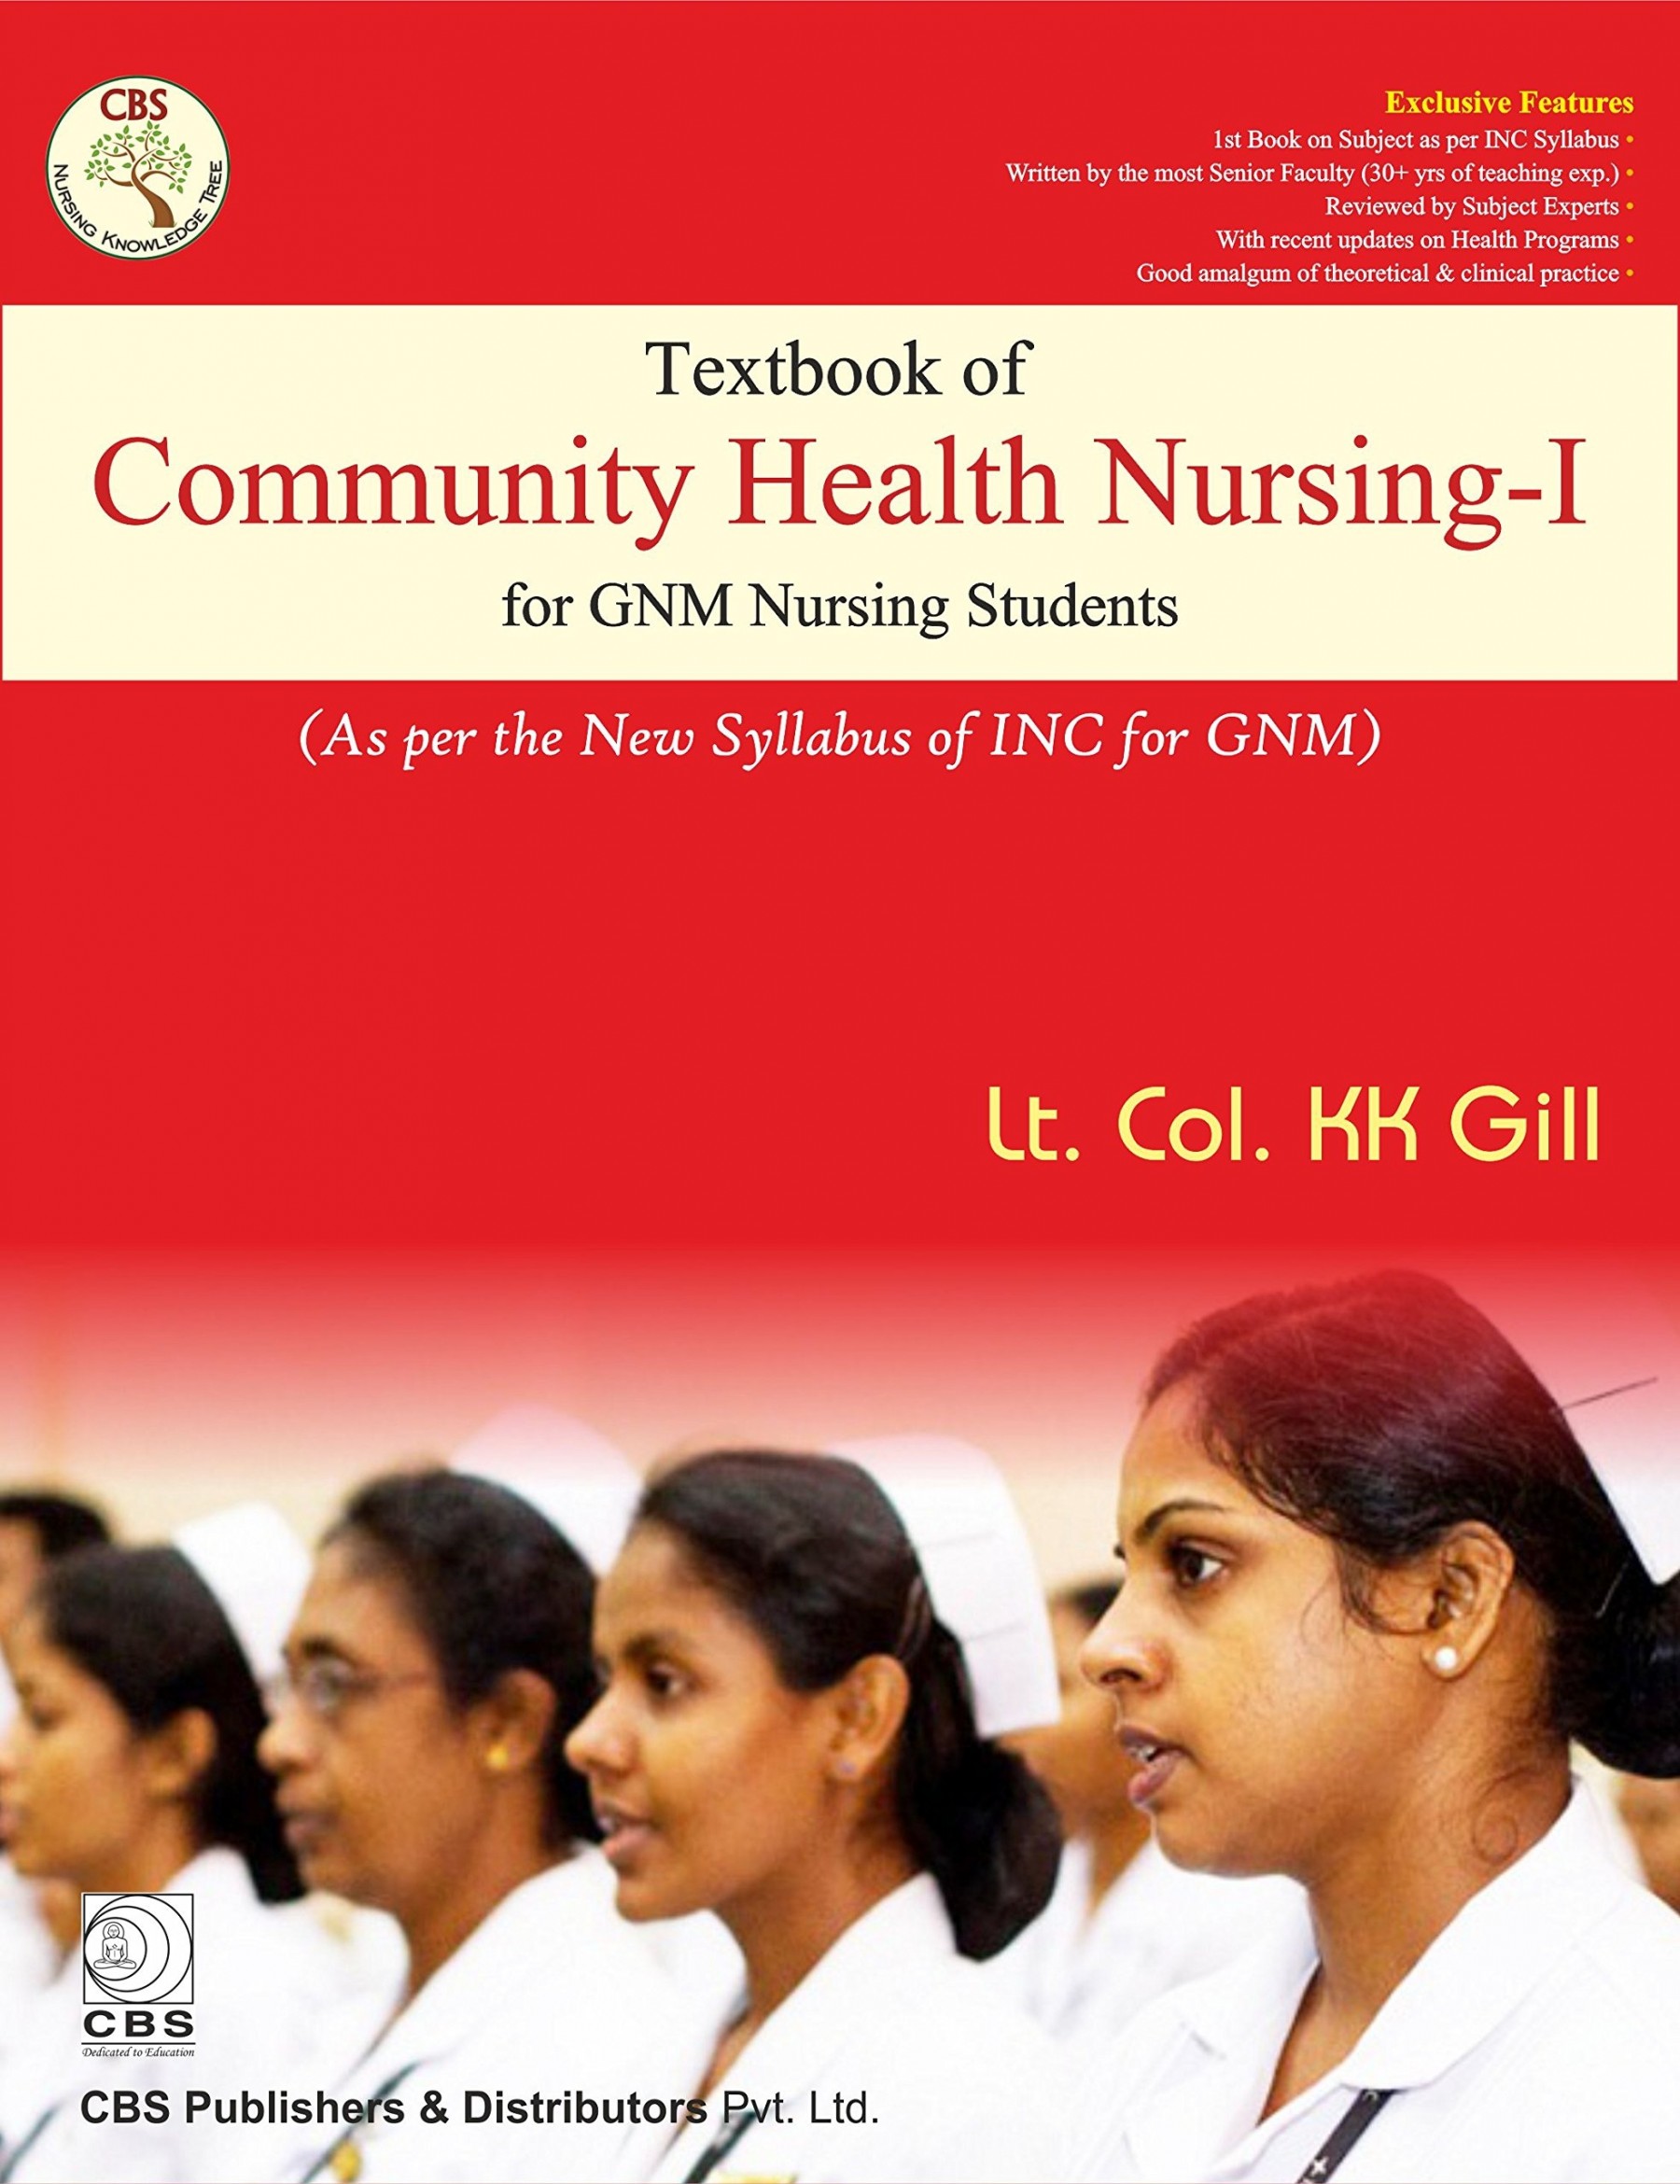 Textbook of Community Health Nursing - I for GNM Nursing Students